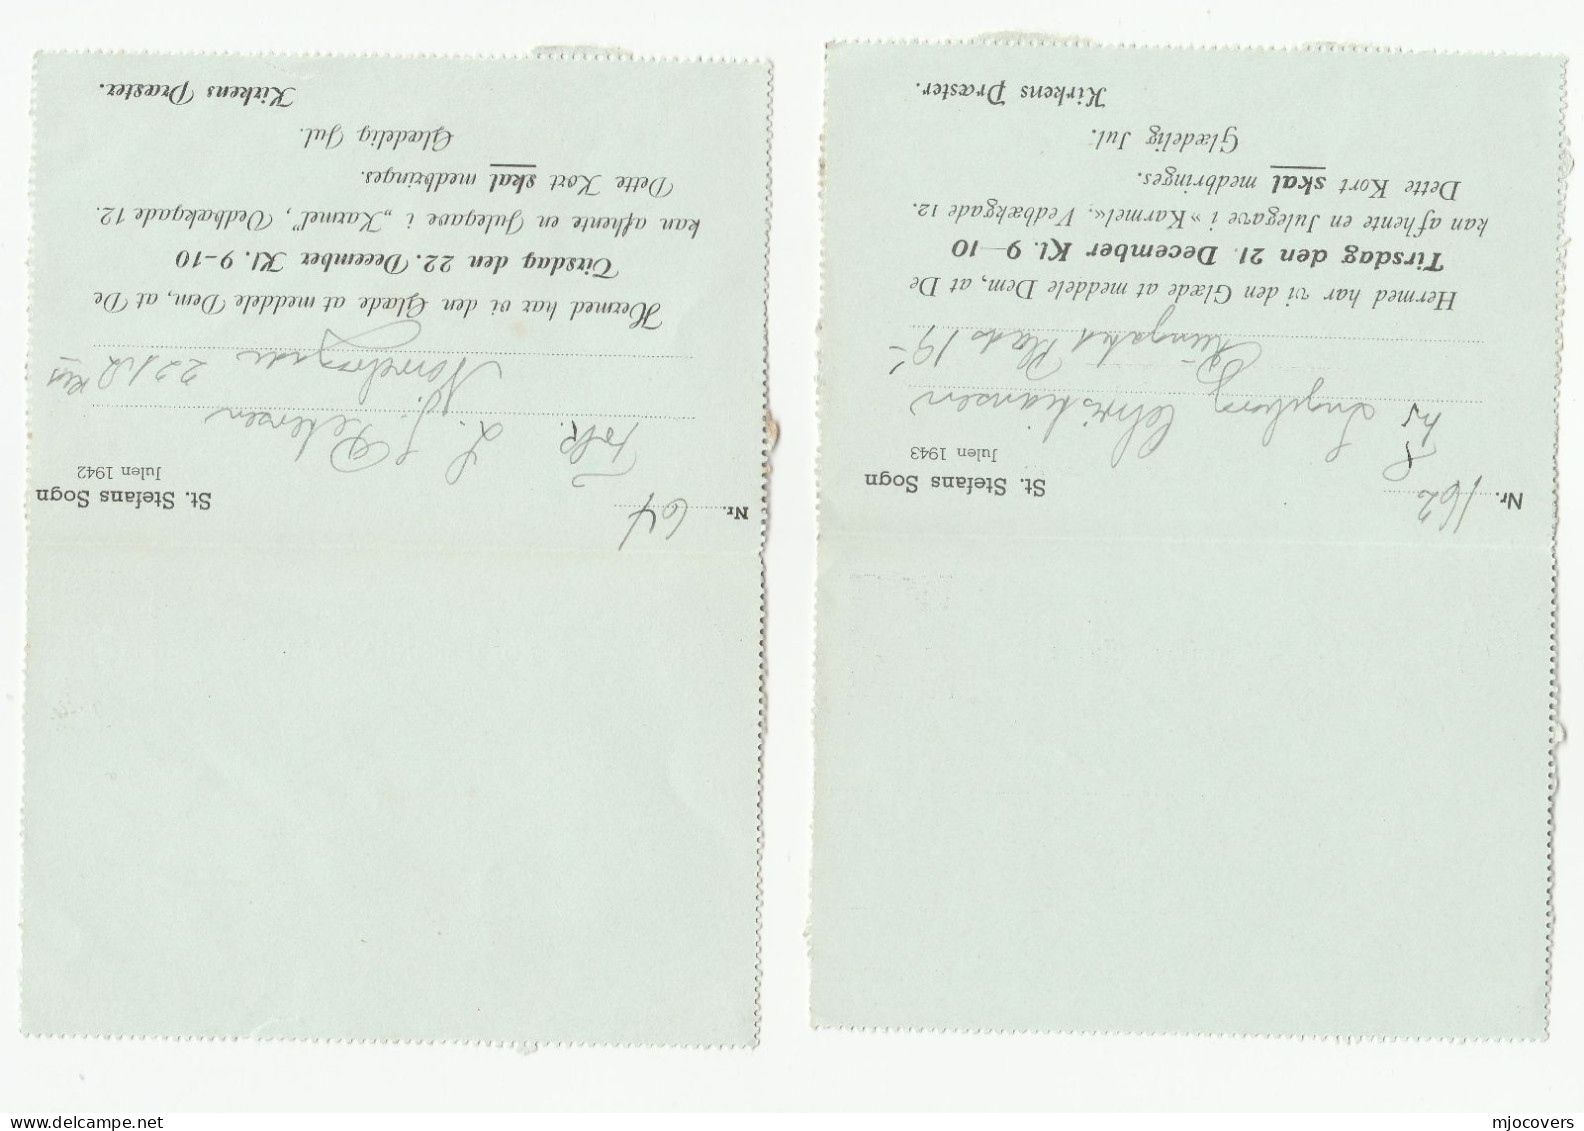 1943 & 1944 CHURCH CRUSADER Labels ST STEPHEN'S Parish LETTTERCARDS Postal Stationery DENMARK Christmas Religion - Ganzsachen